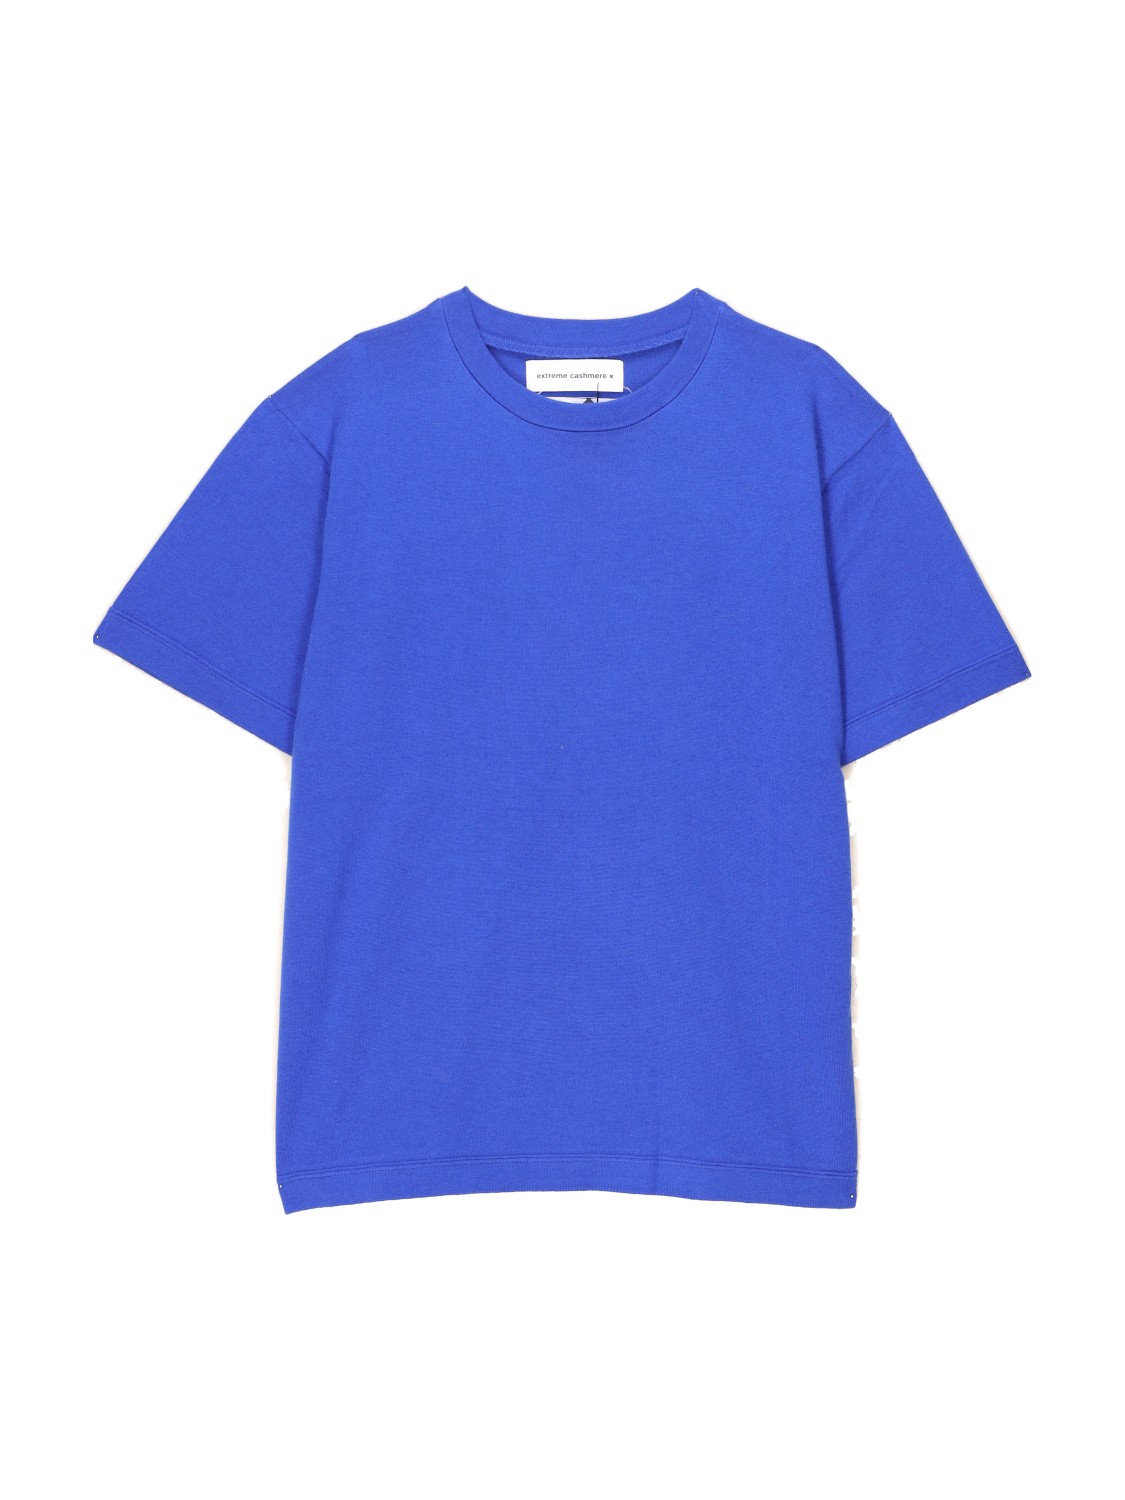 N° 268 Cuba - Boxy t-shirt in cotton-cashmere-blend 